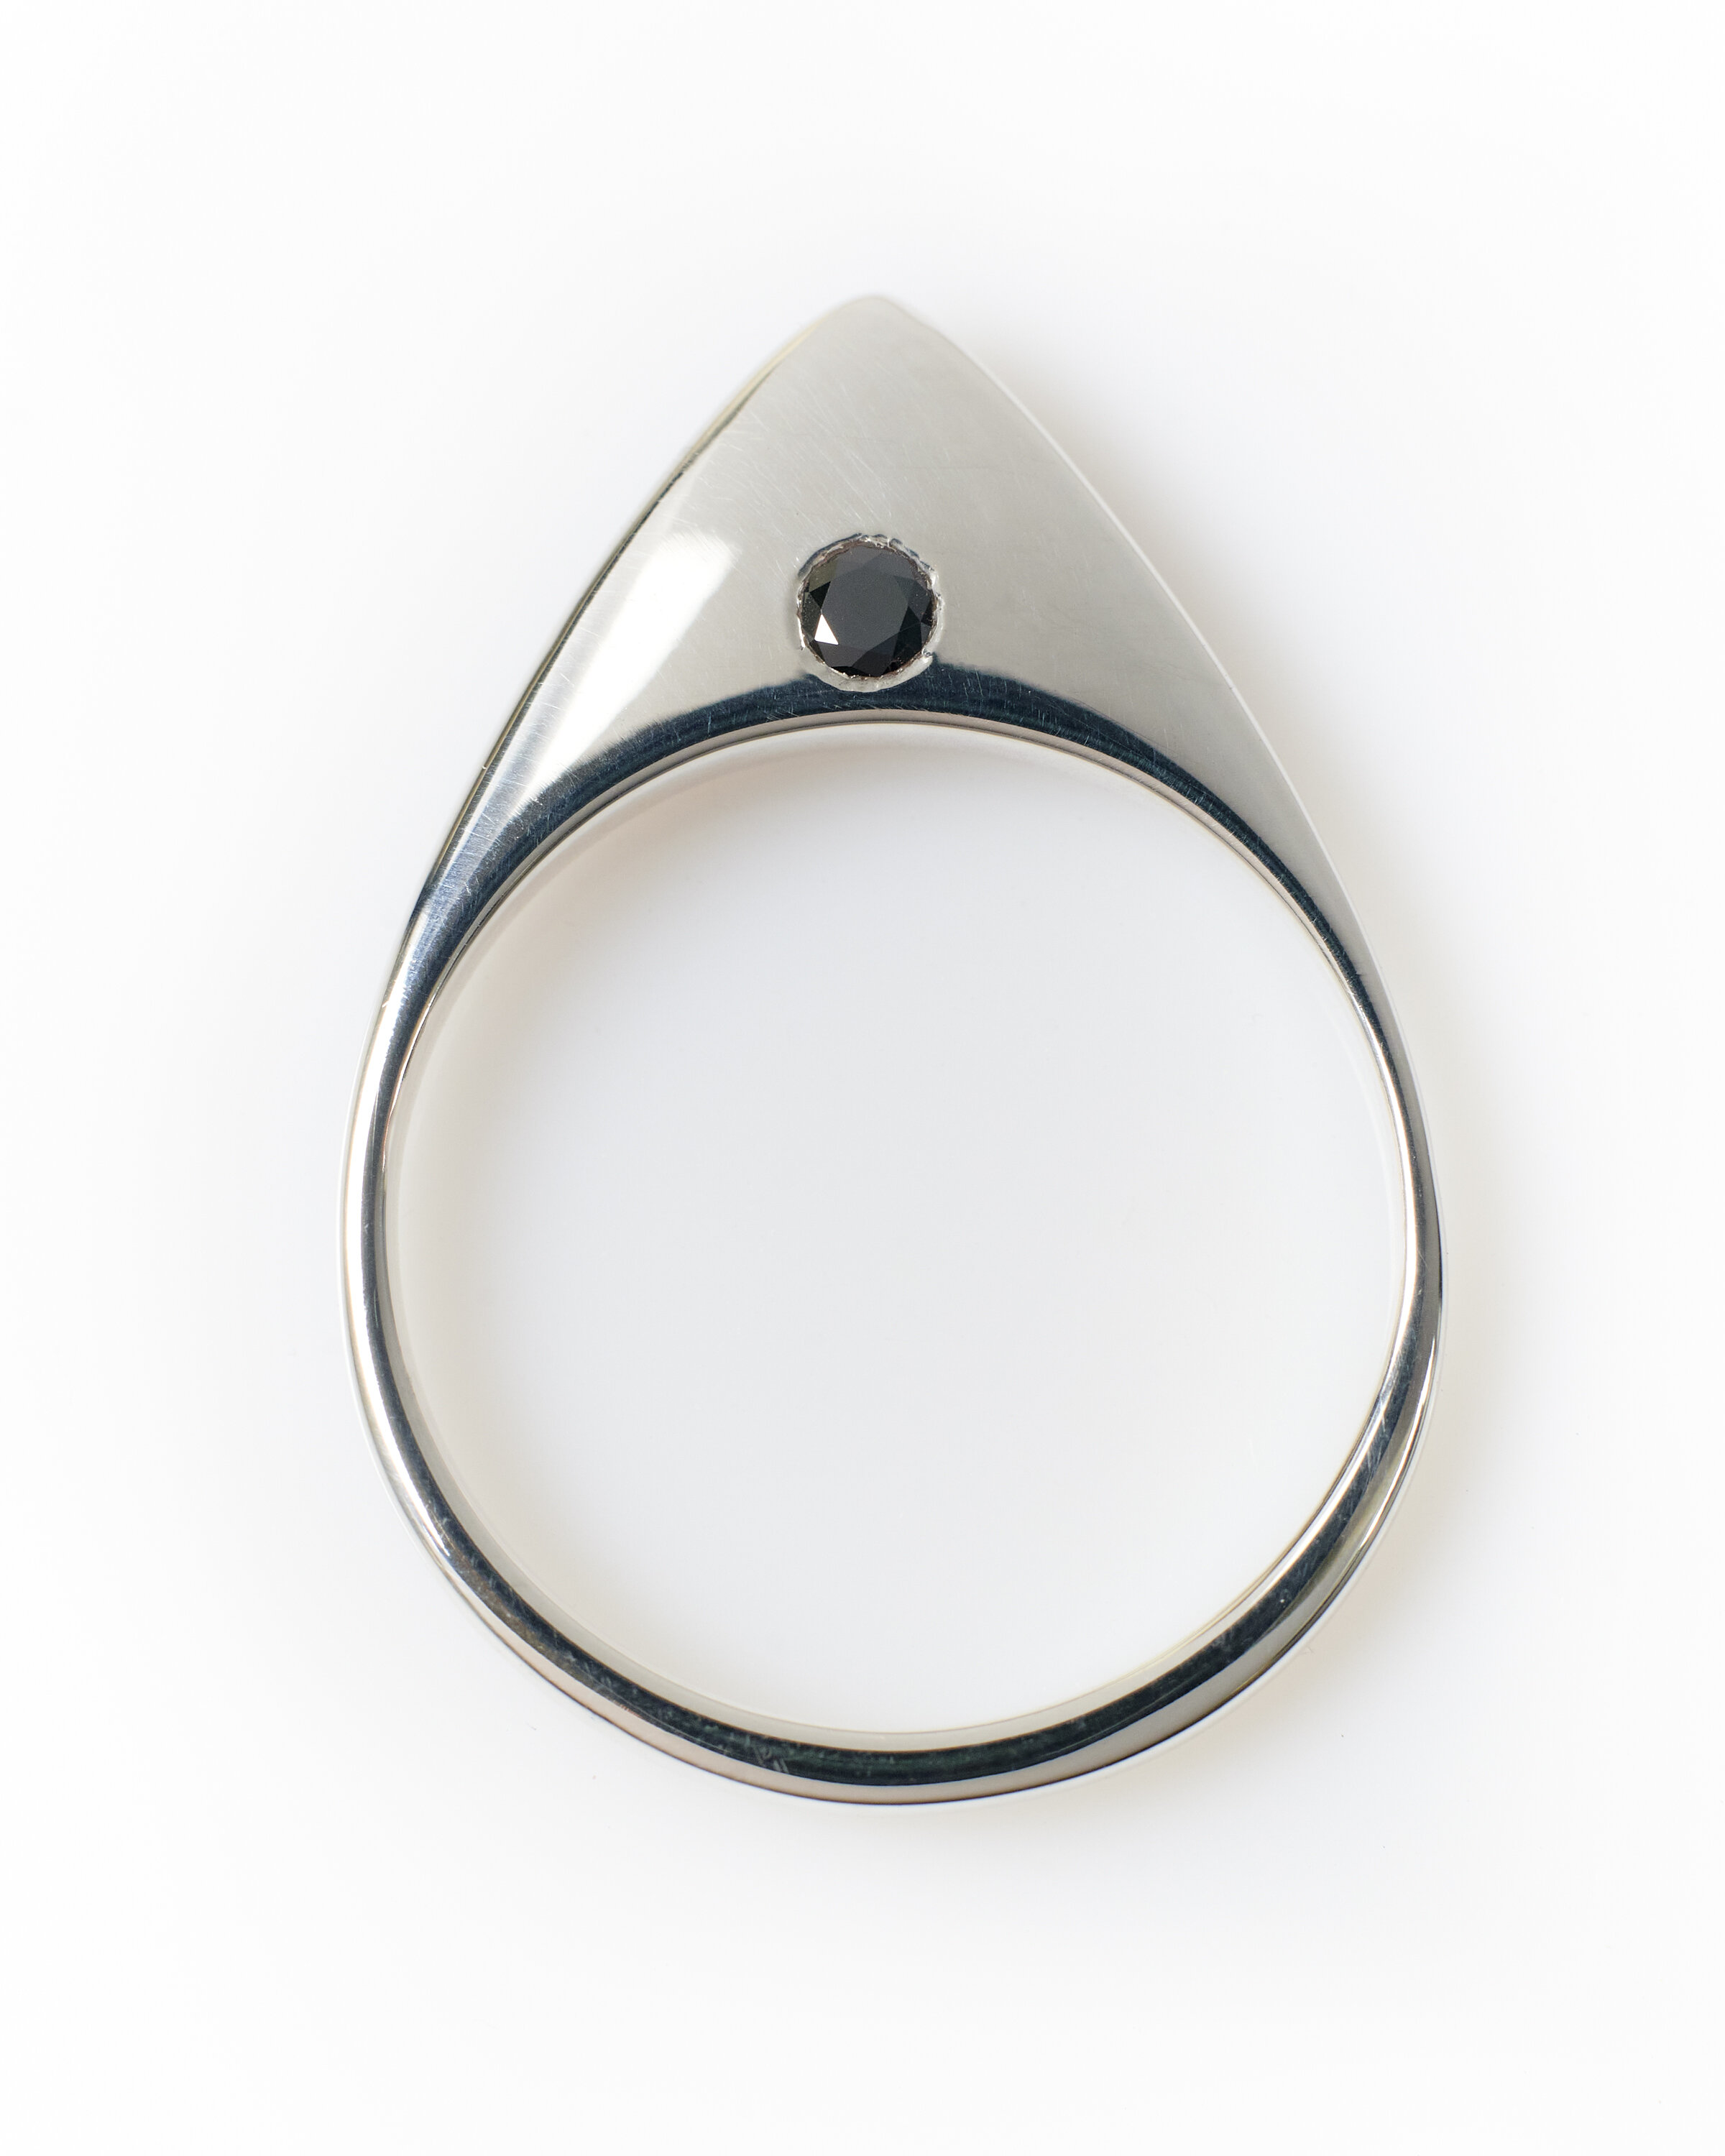 Black Tourmaline Pyramid Ring, Adjustable Ring, Fits Sizes 5 6 7 8 9 - Etsy